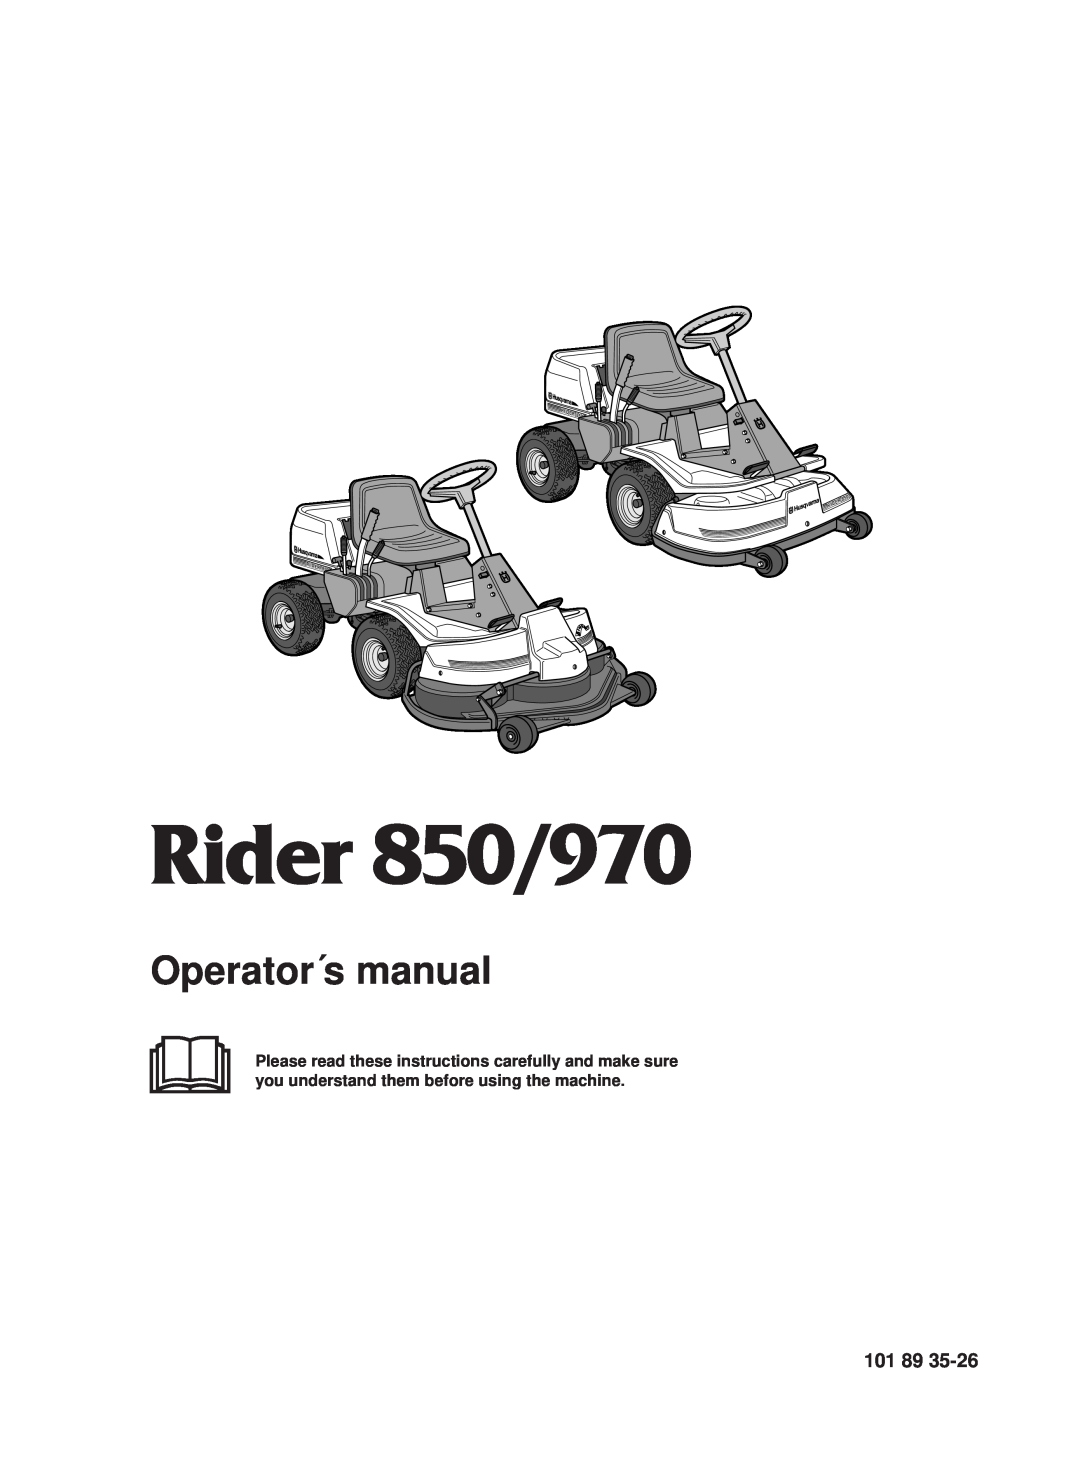 Husqvarna manual 101, Rider 850/970, Operator´s manual, R I D E R 